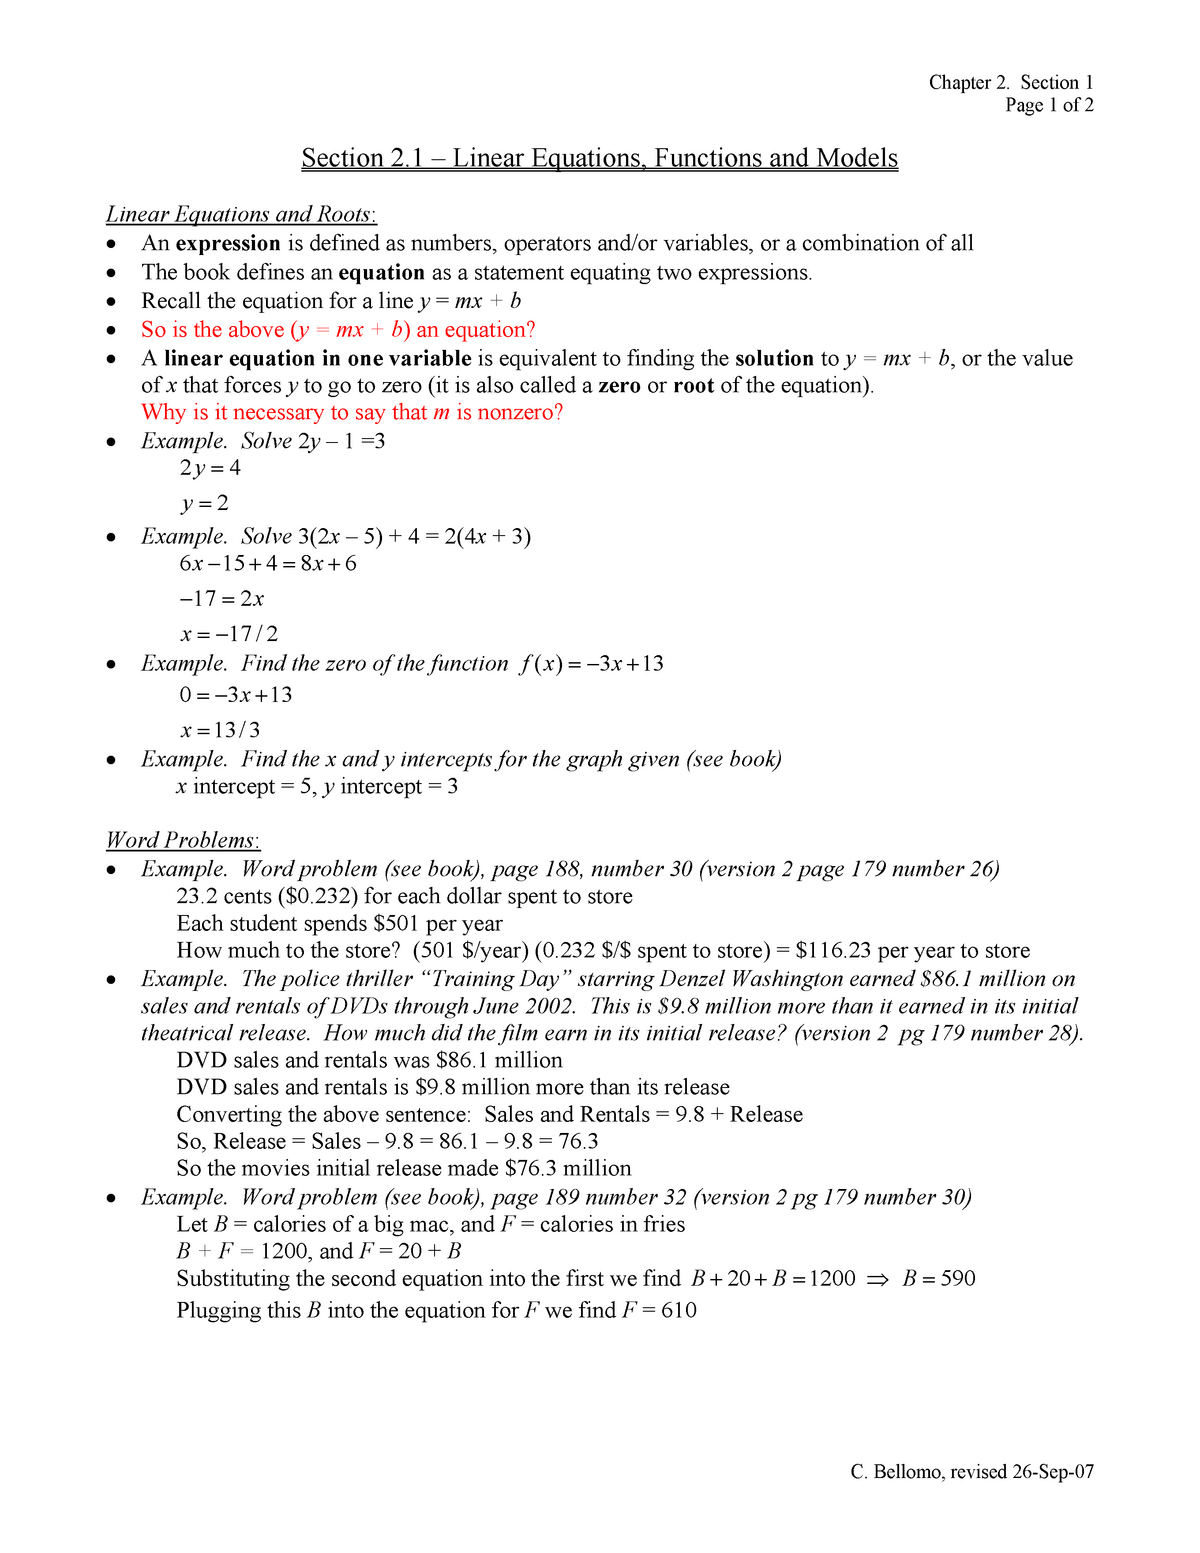 homework section 1 2 college algebra